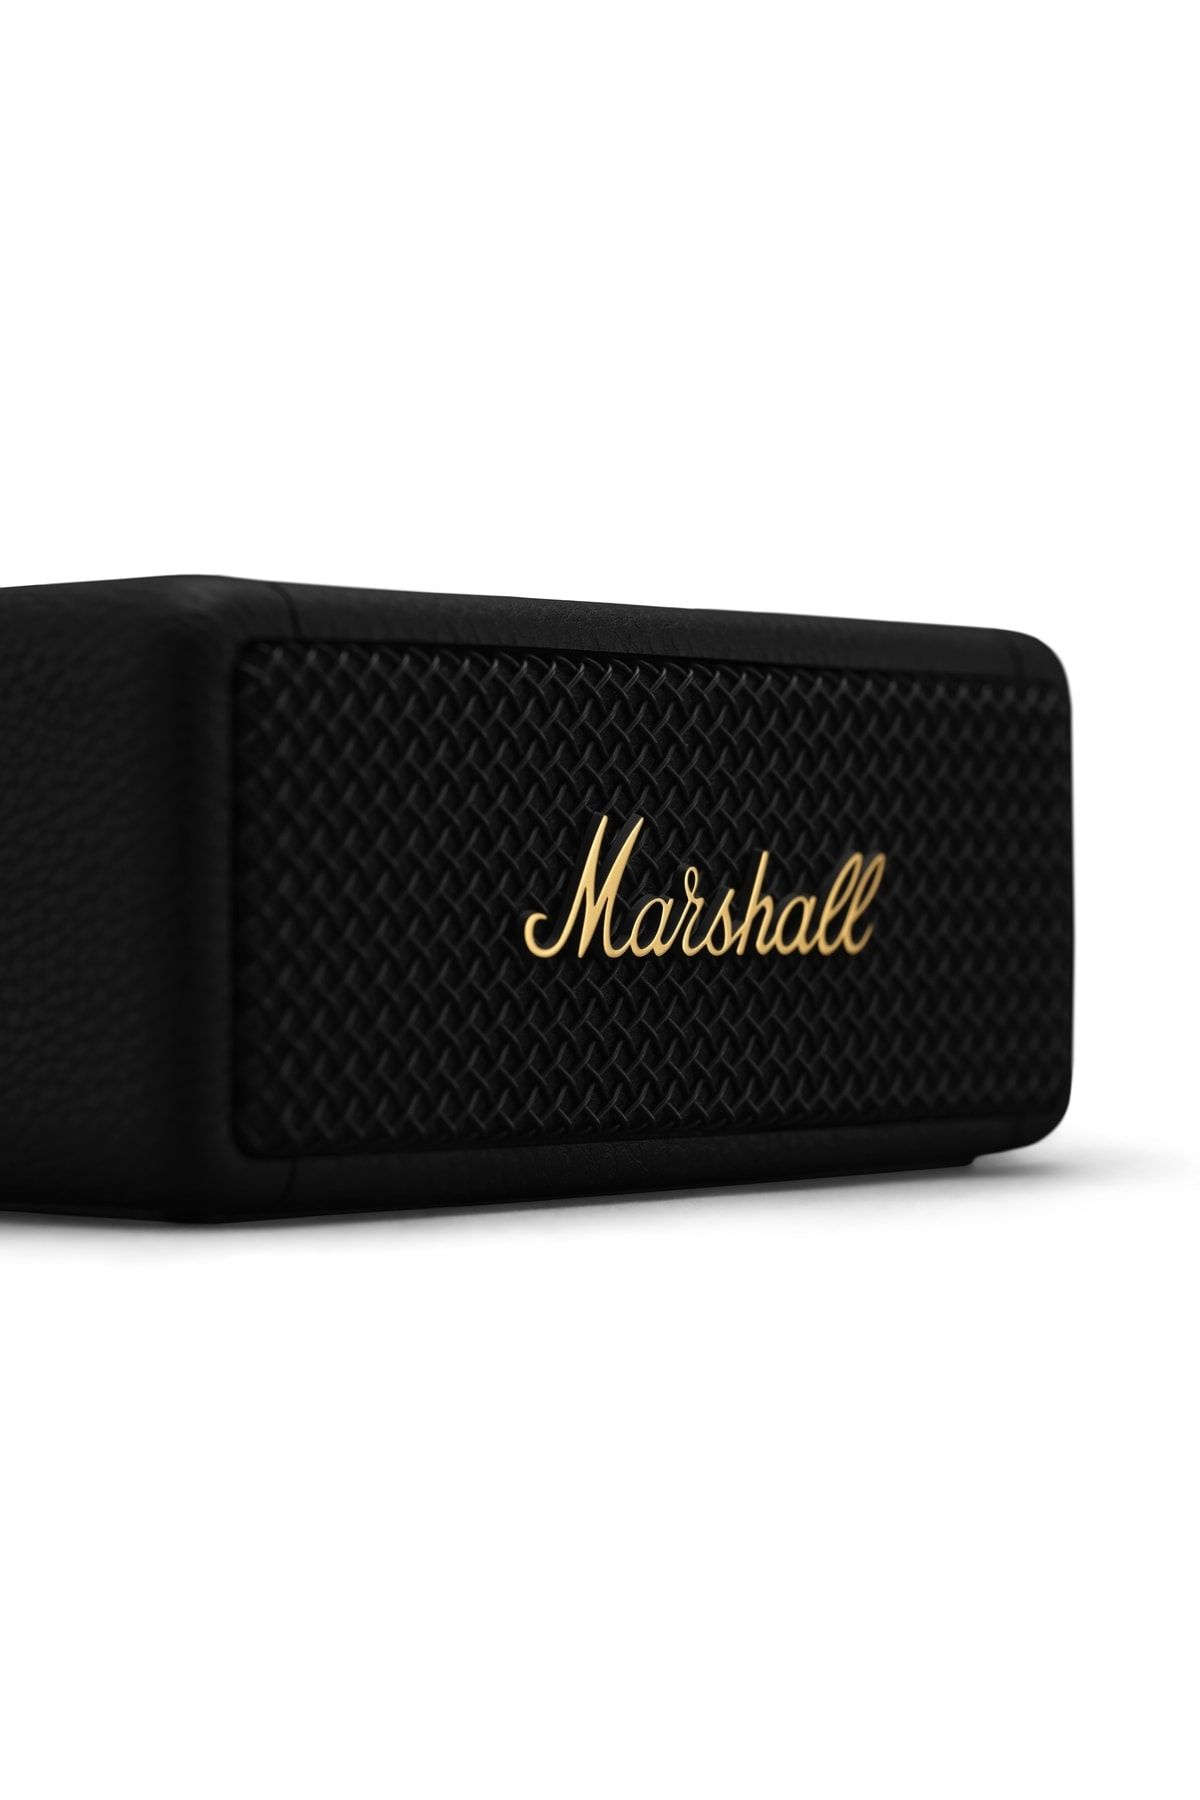 Marshall Emberton Iı Bluetooth Hoparlör, Black&brass